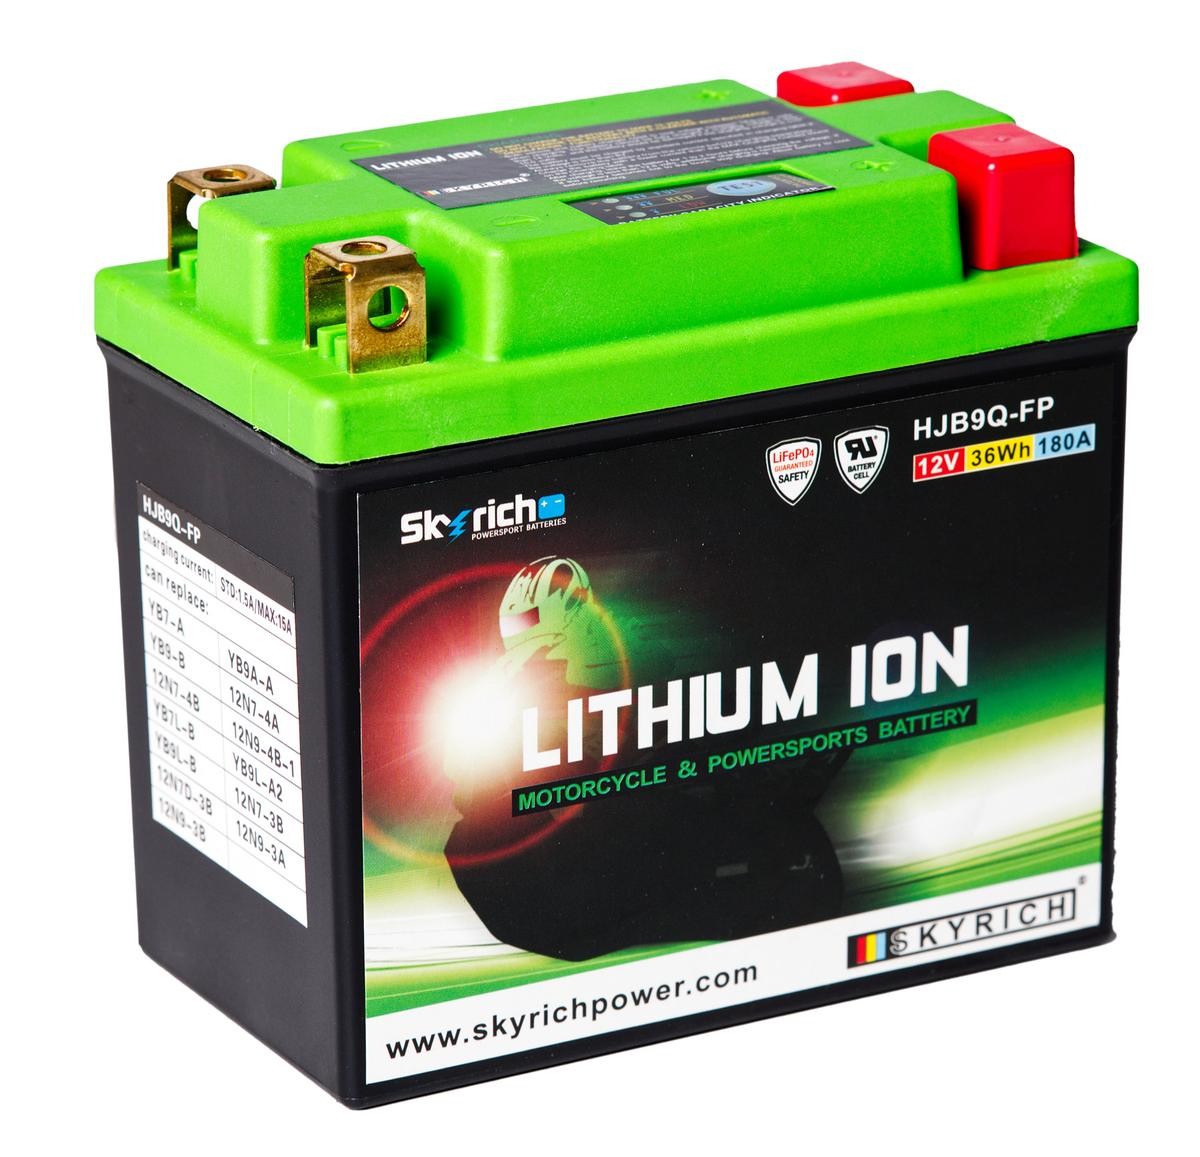 SKYRICH LITHIUM ION 12V 3Ah 180A N Li-Ion Battery Cold-test Current, EN: 180A, Voltage: 12V, Terminal Placement: 1 Starter battery HJB9Q-FP buy